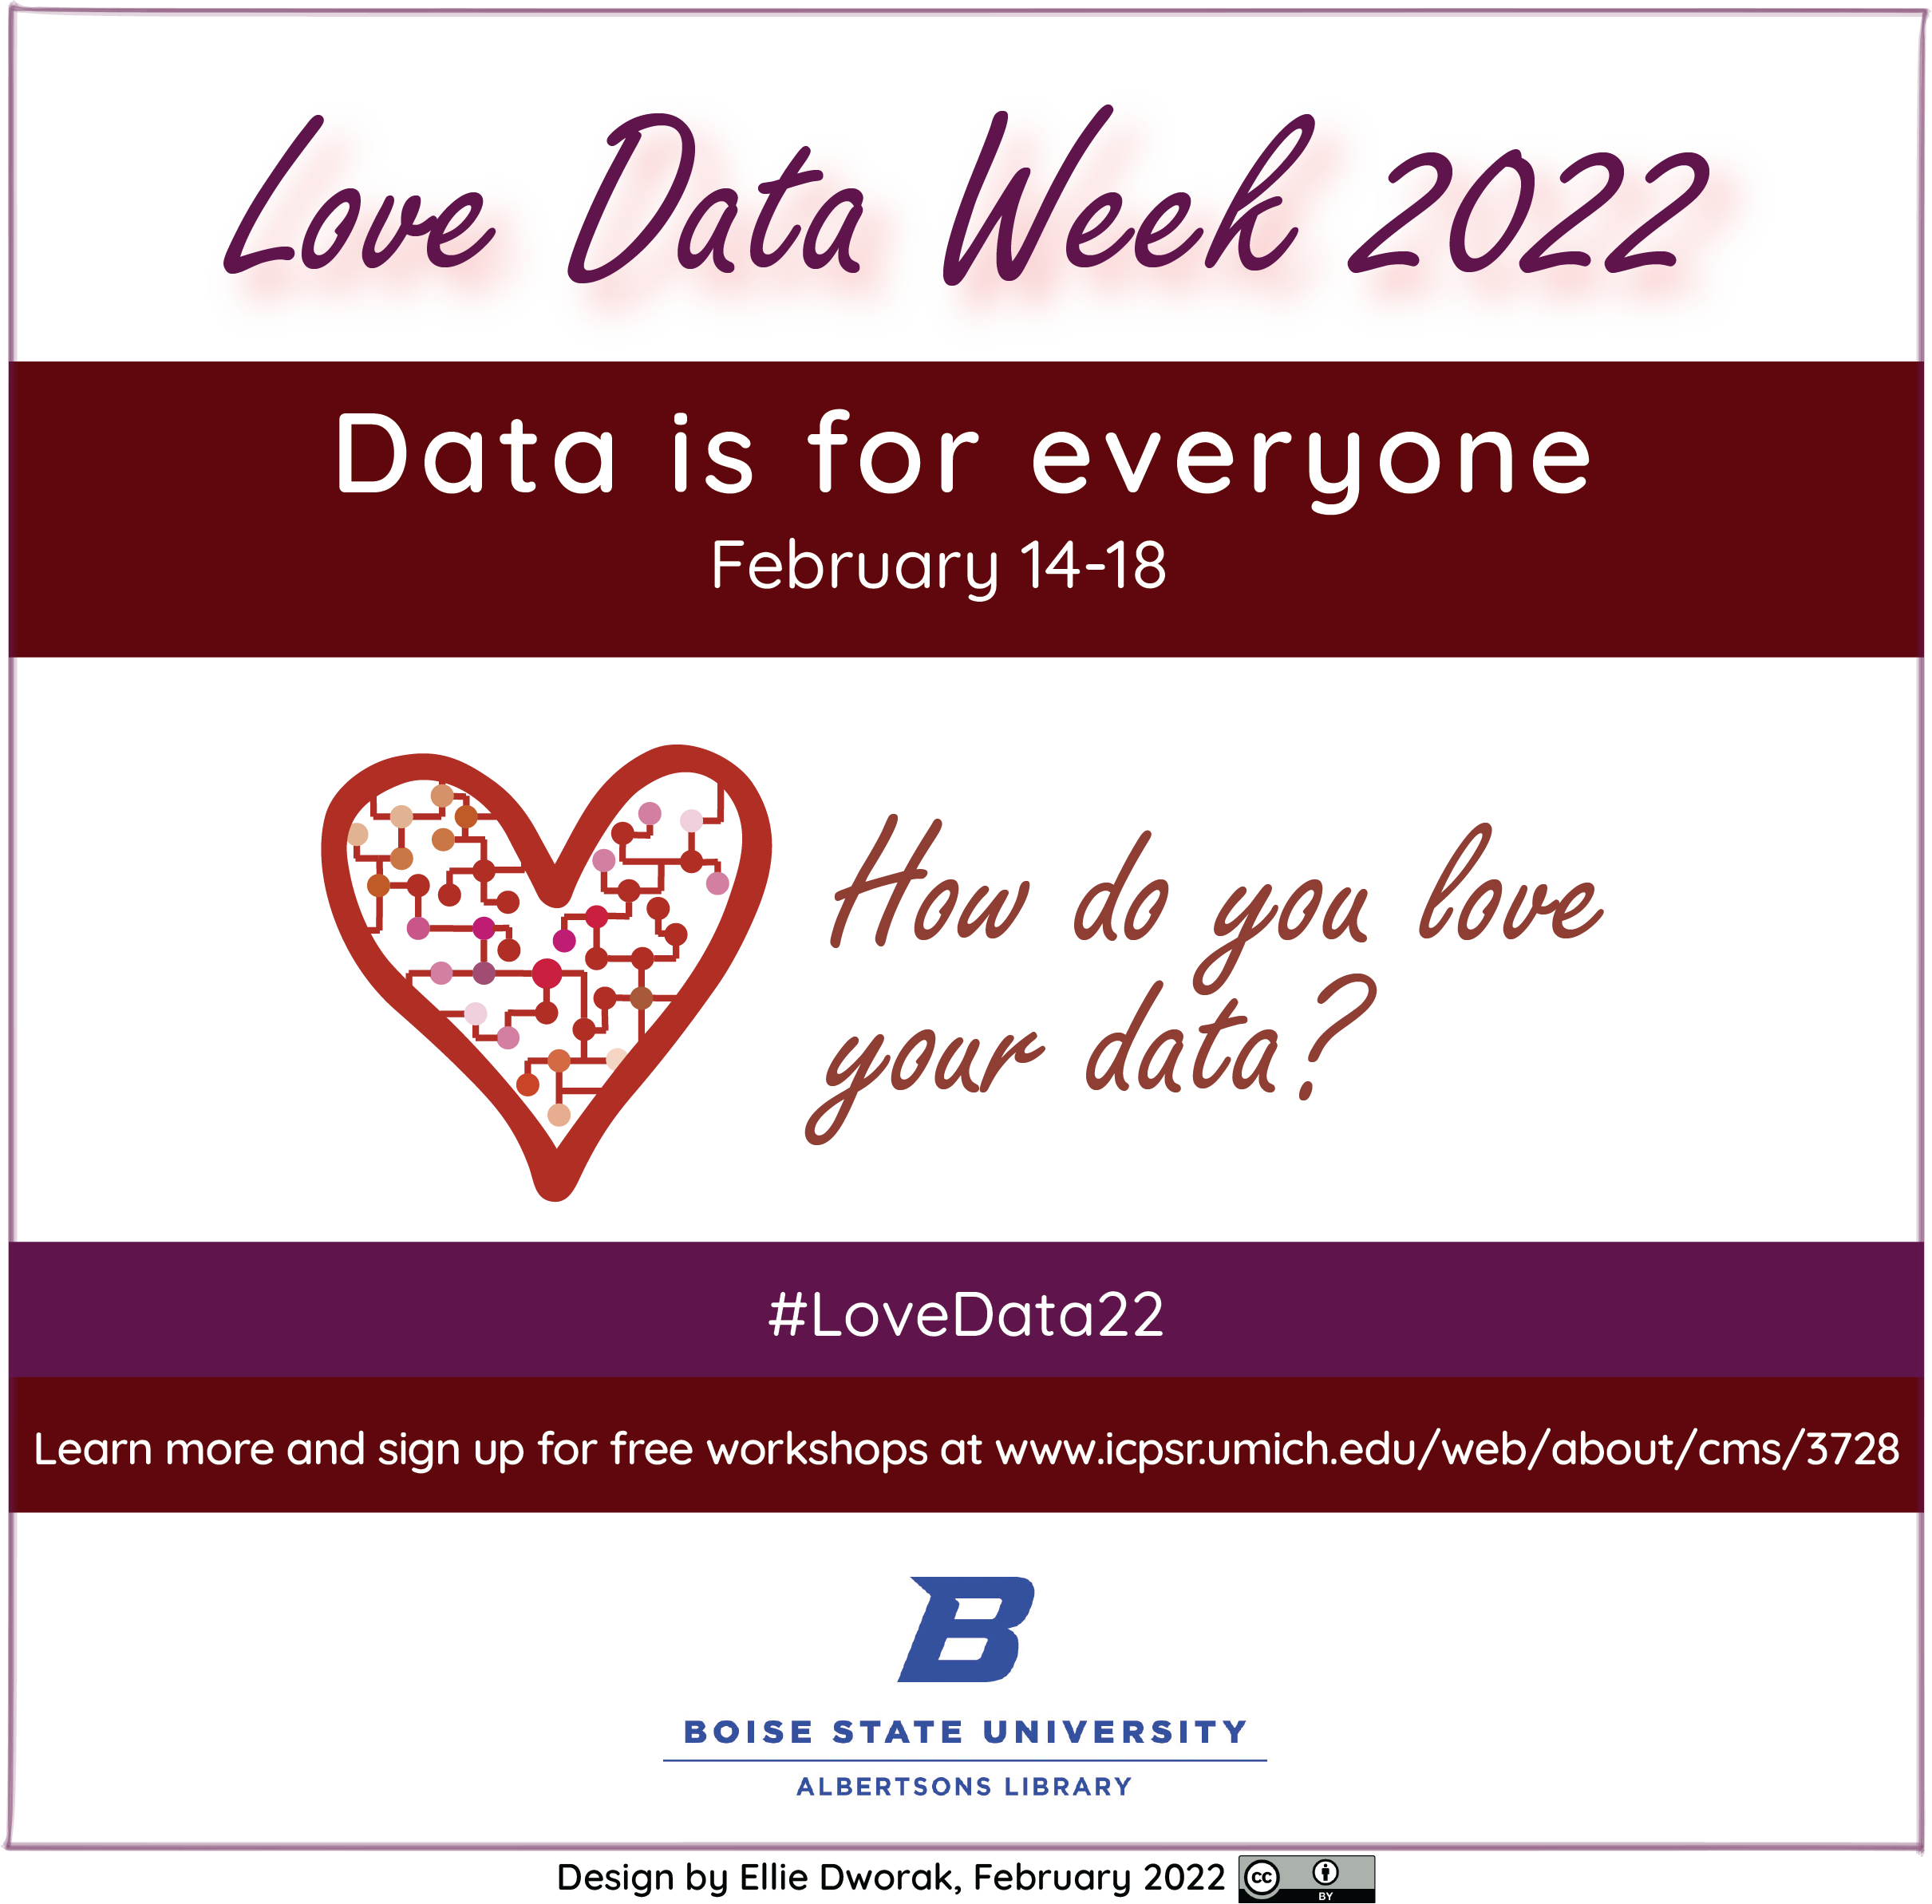 Love data week poster